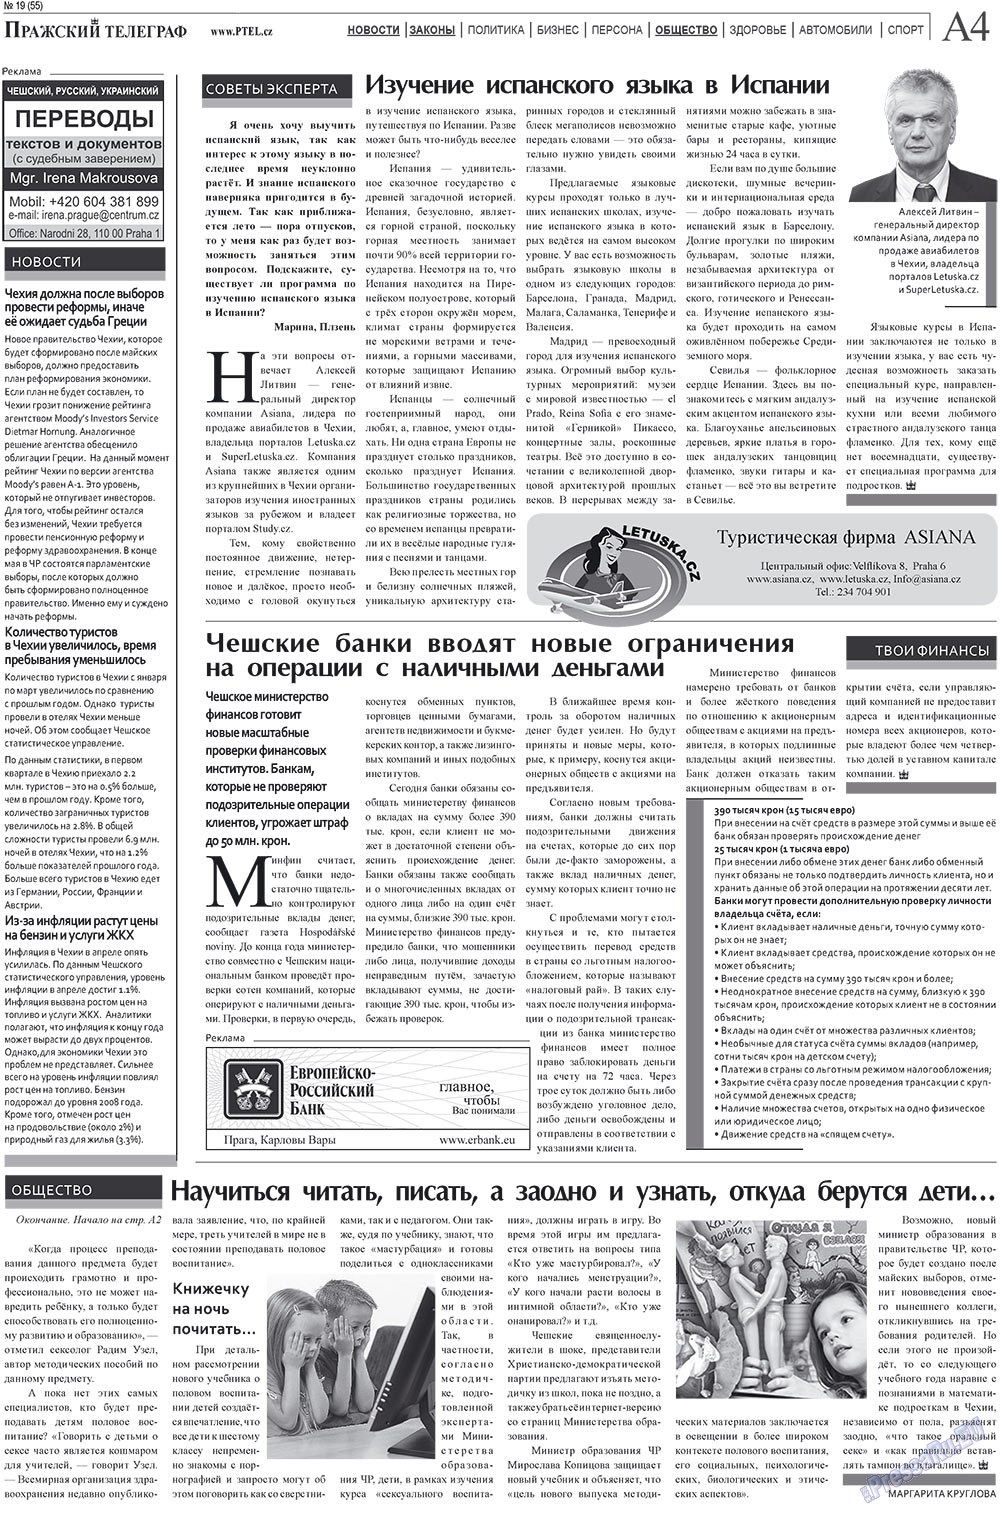 Пражский телеграф, газета. 2010 №19 стр.4